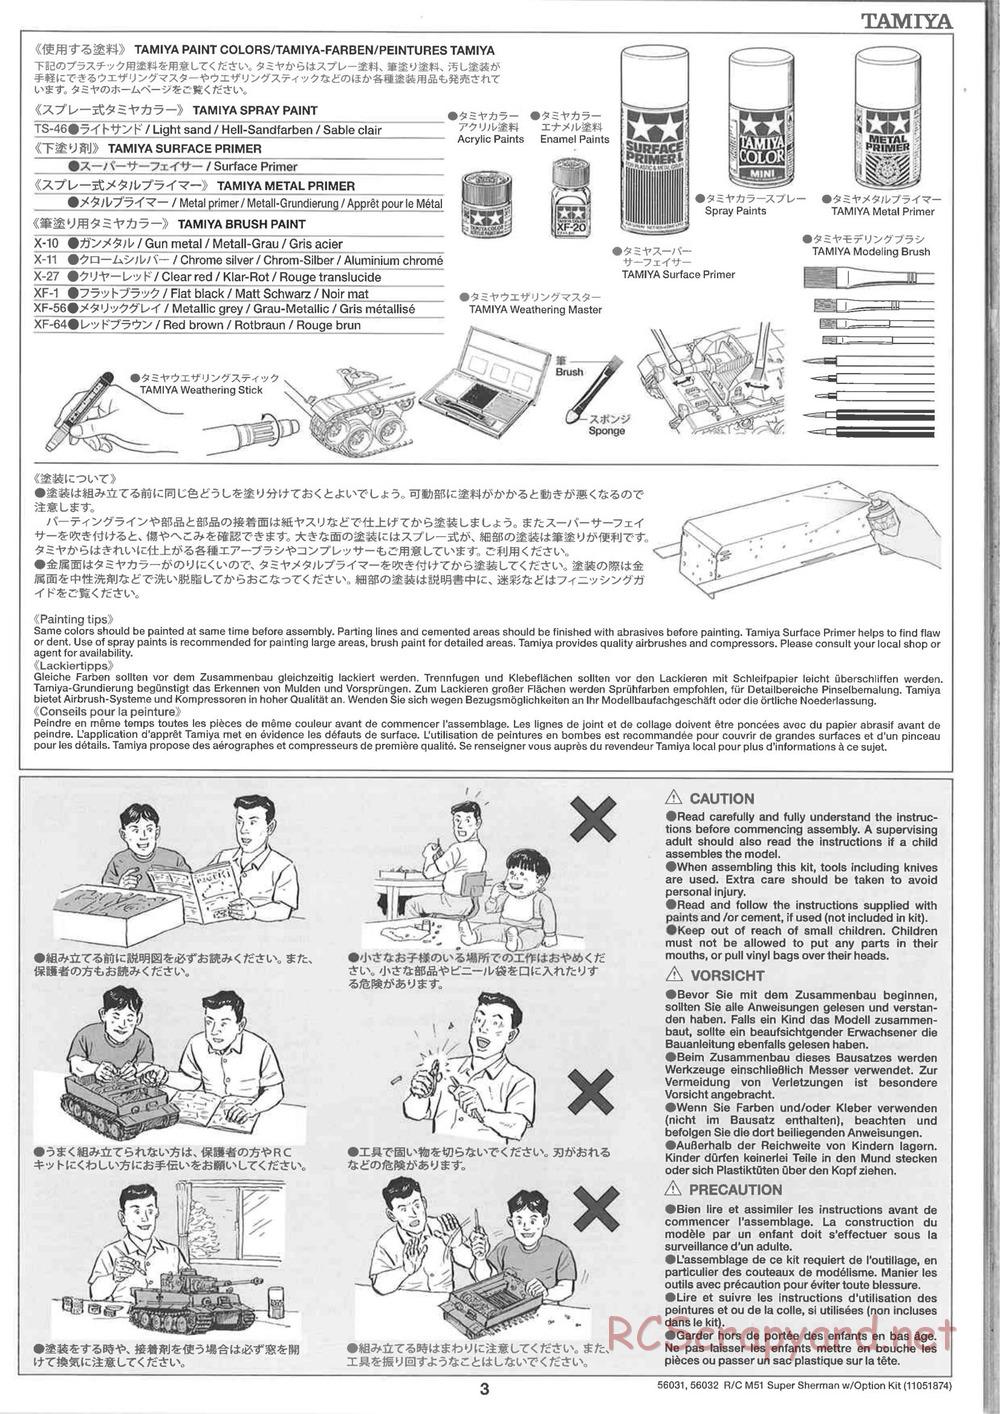 Tamiya - Super Sherman M-51 - 1/16 Scale Chassis - Manual - Page 3